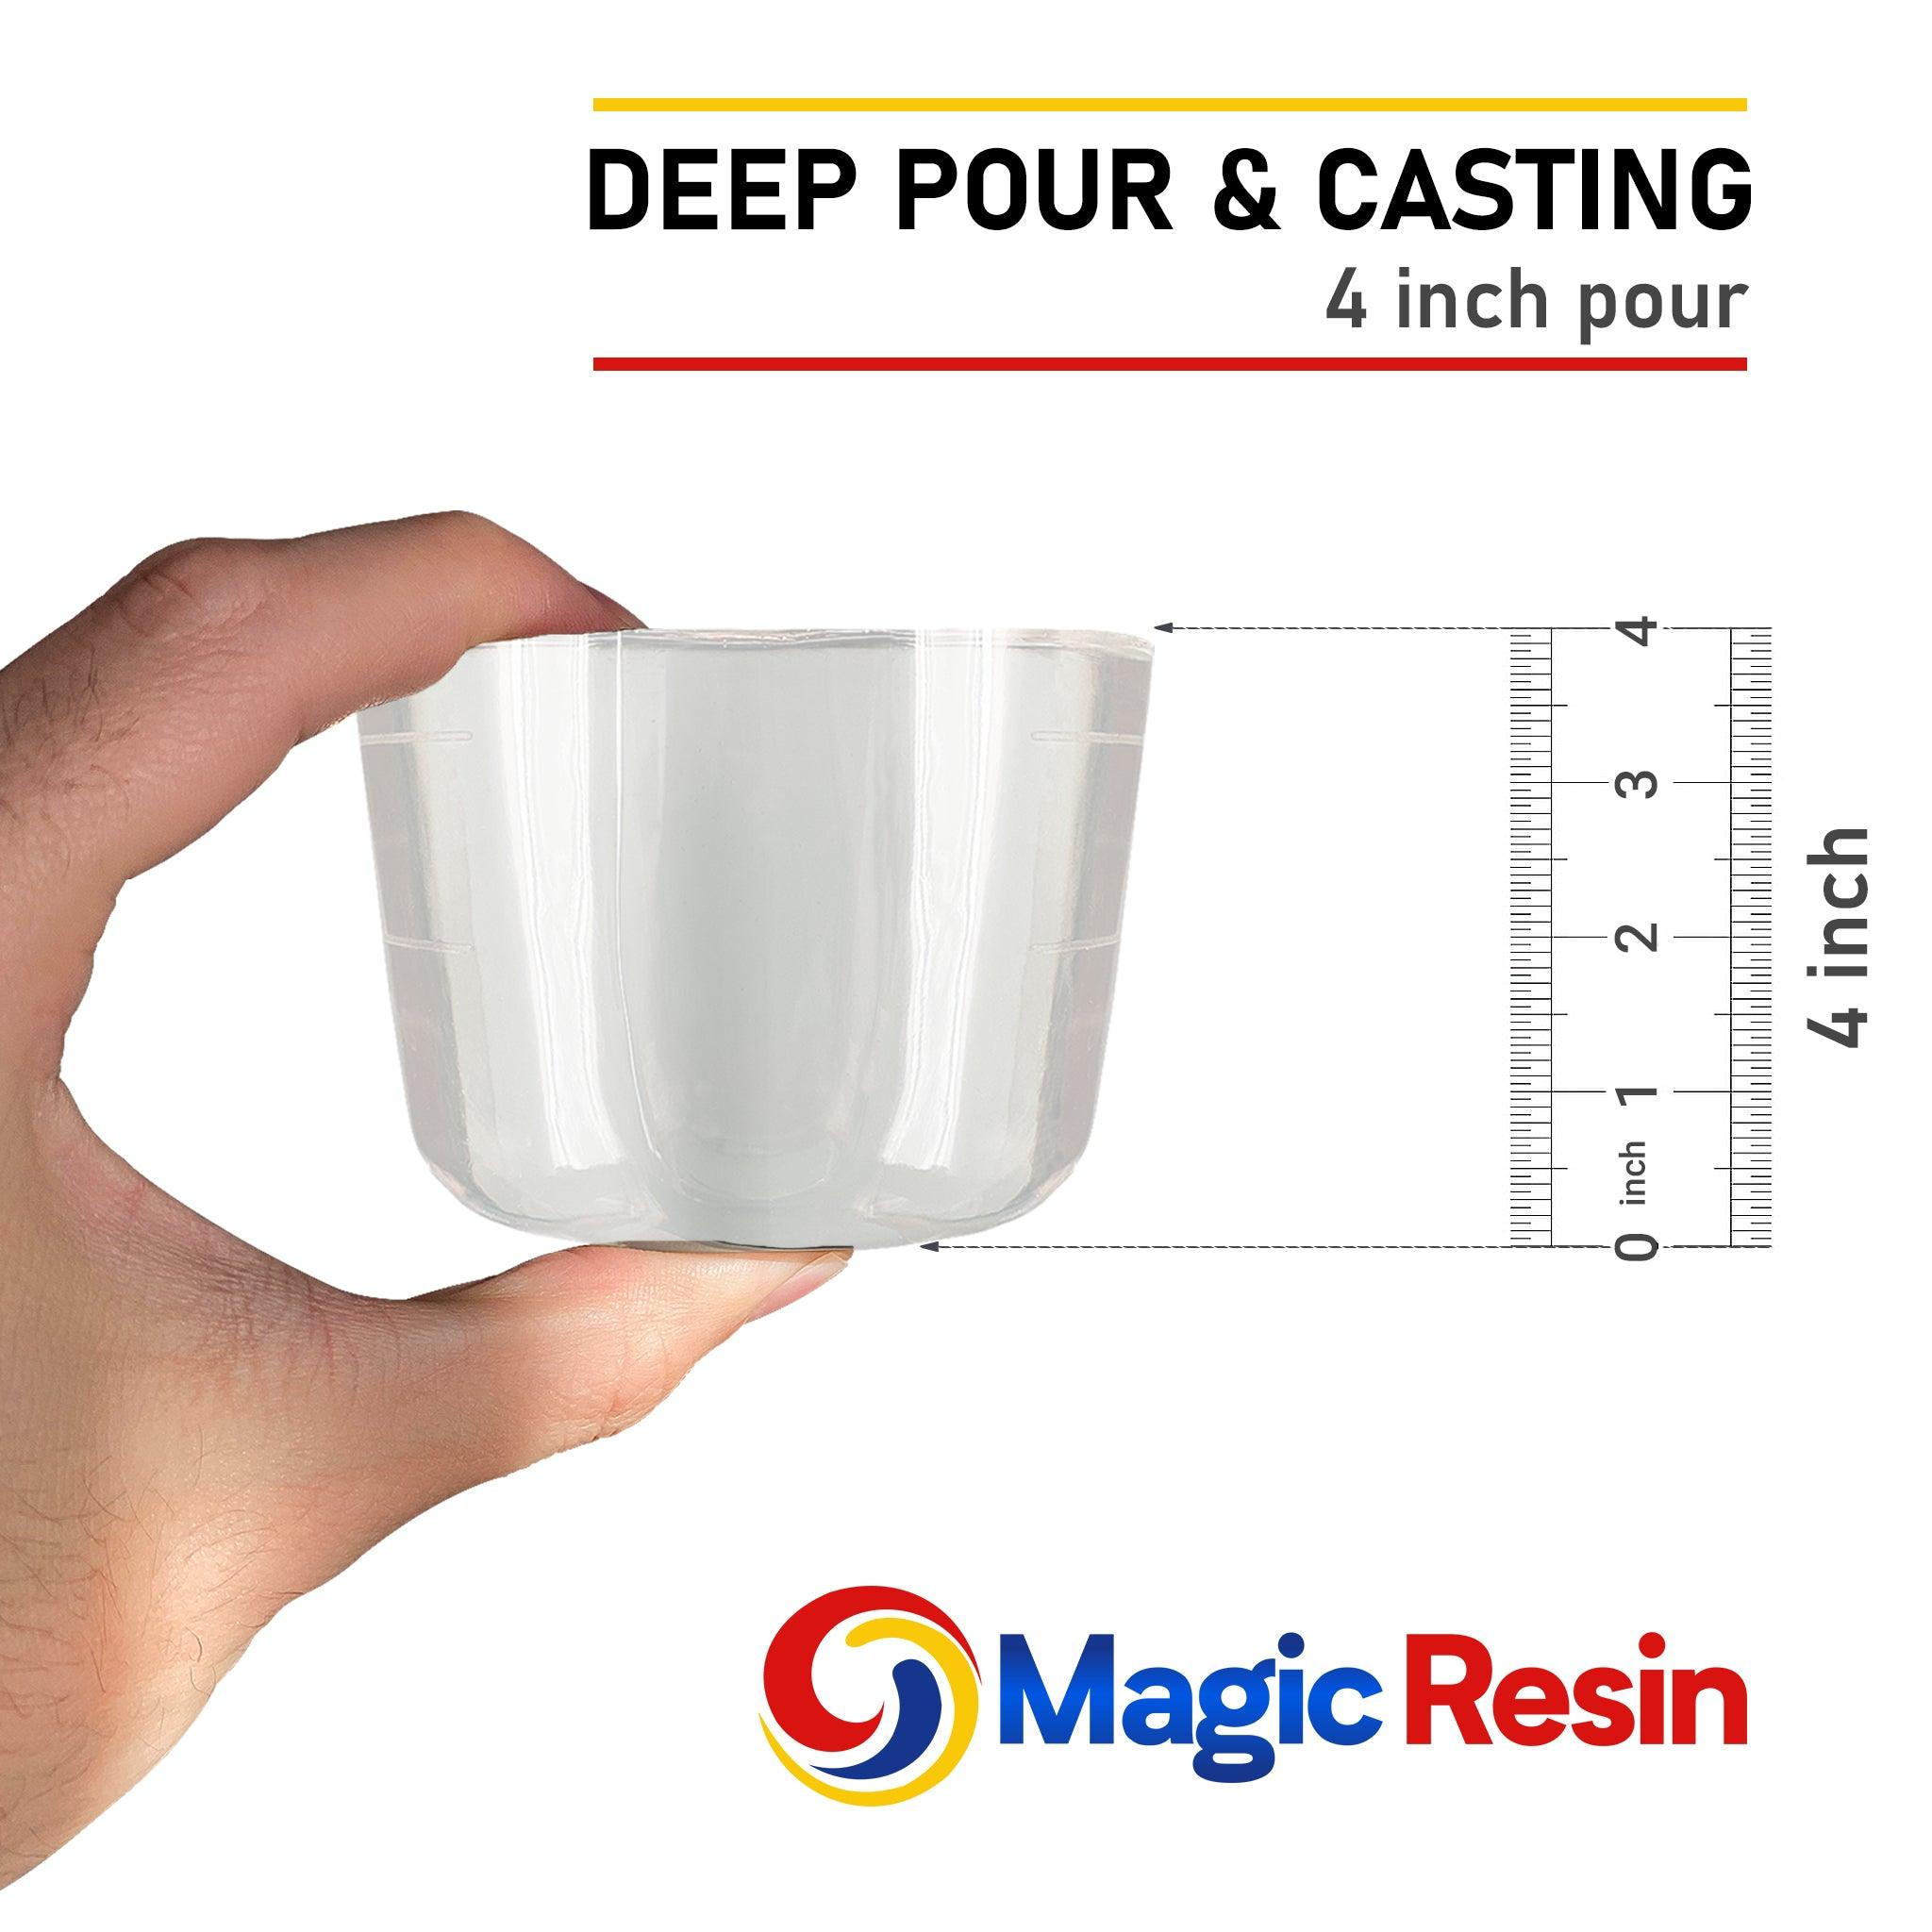 .75 Gallon (2.85 L) | 4" Deep Pour, Casting & Art | Clear Epoxy Resin Kit | Free Shipping - Magic Resin USA